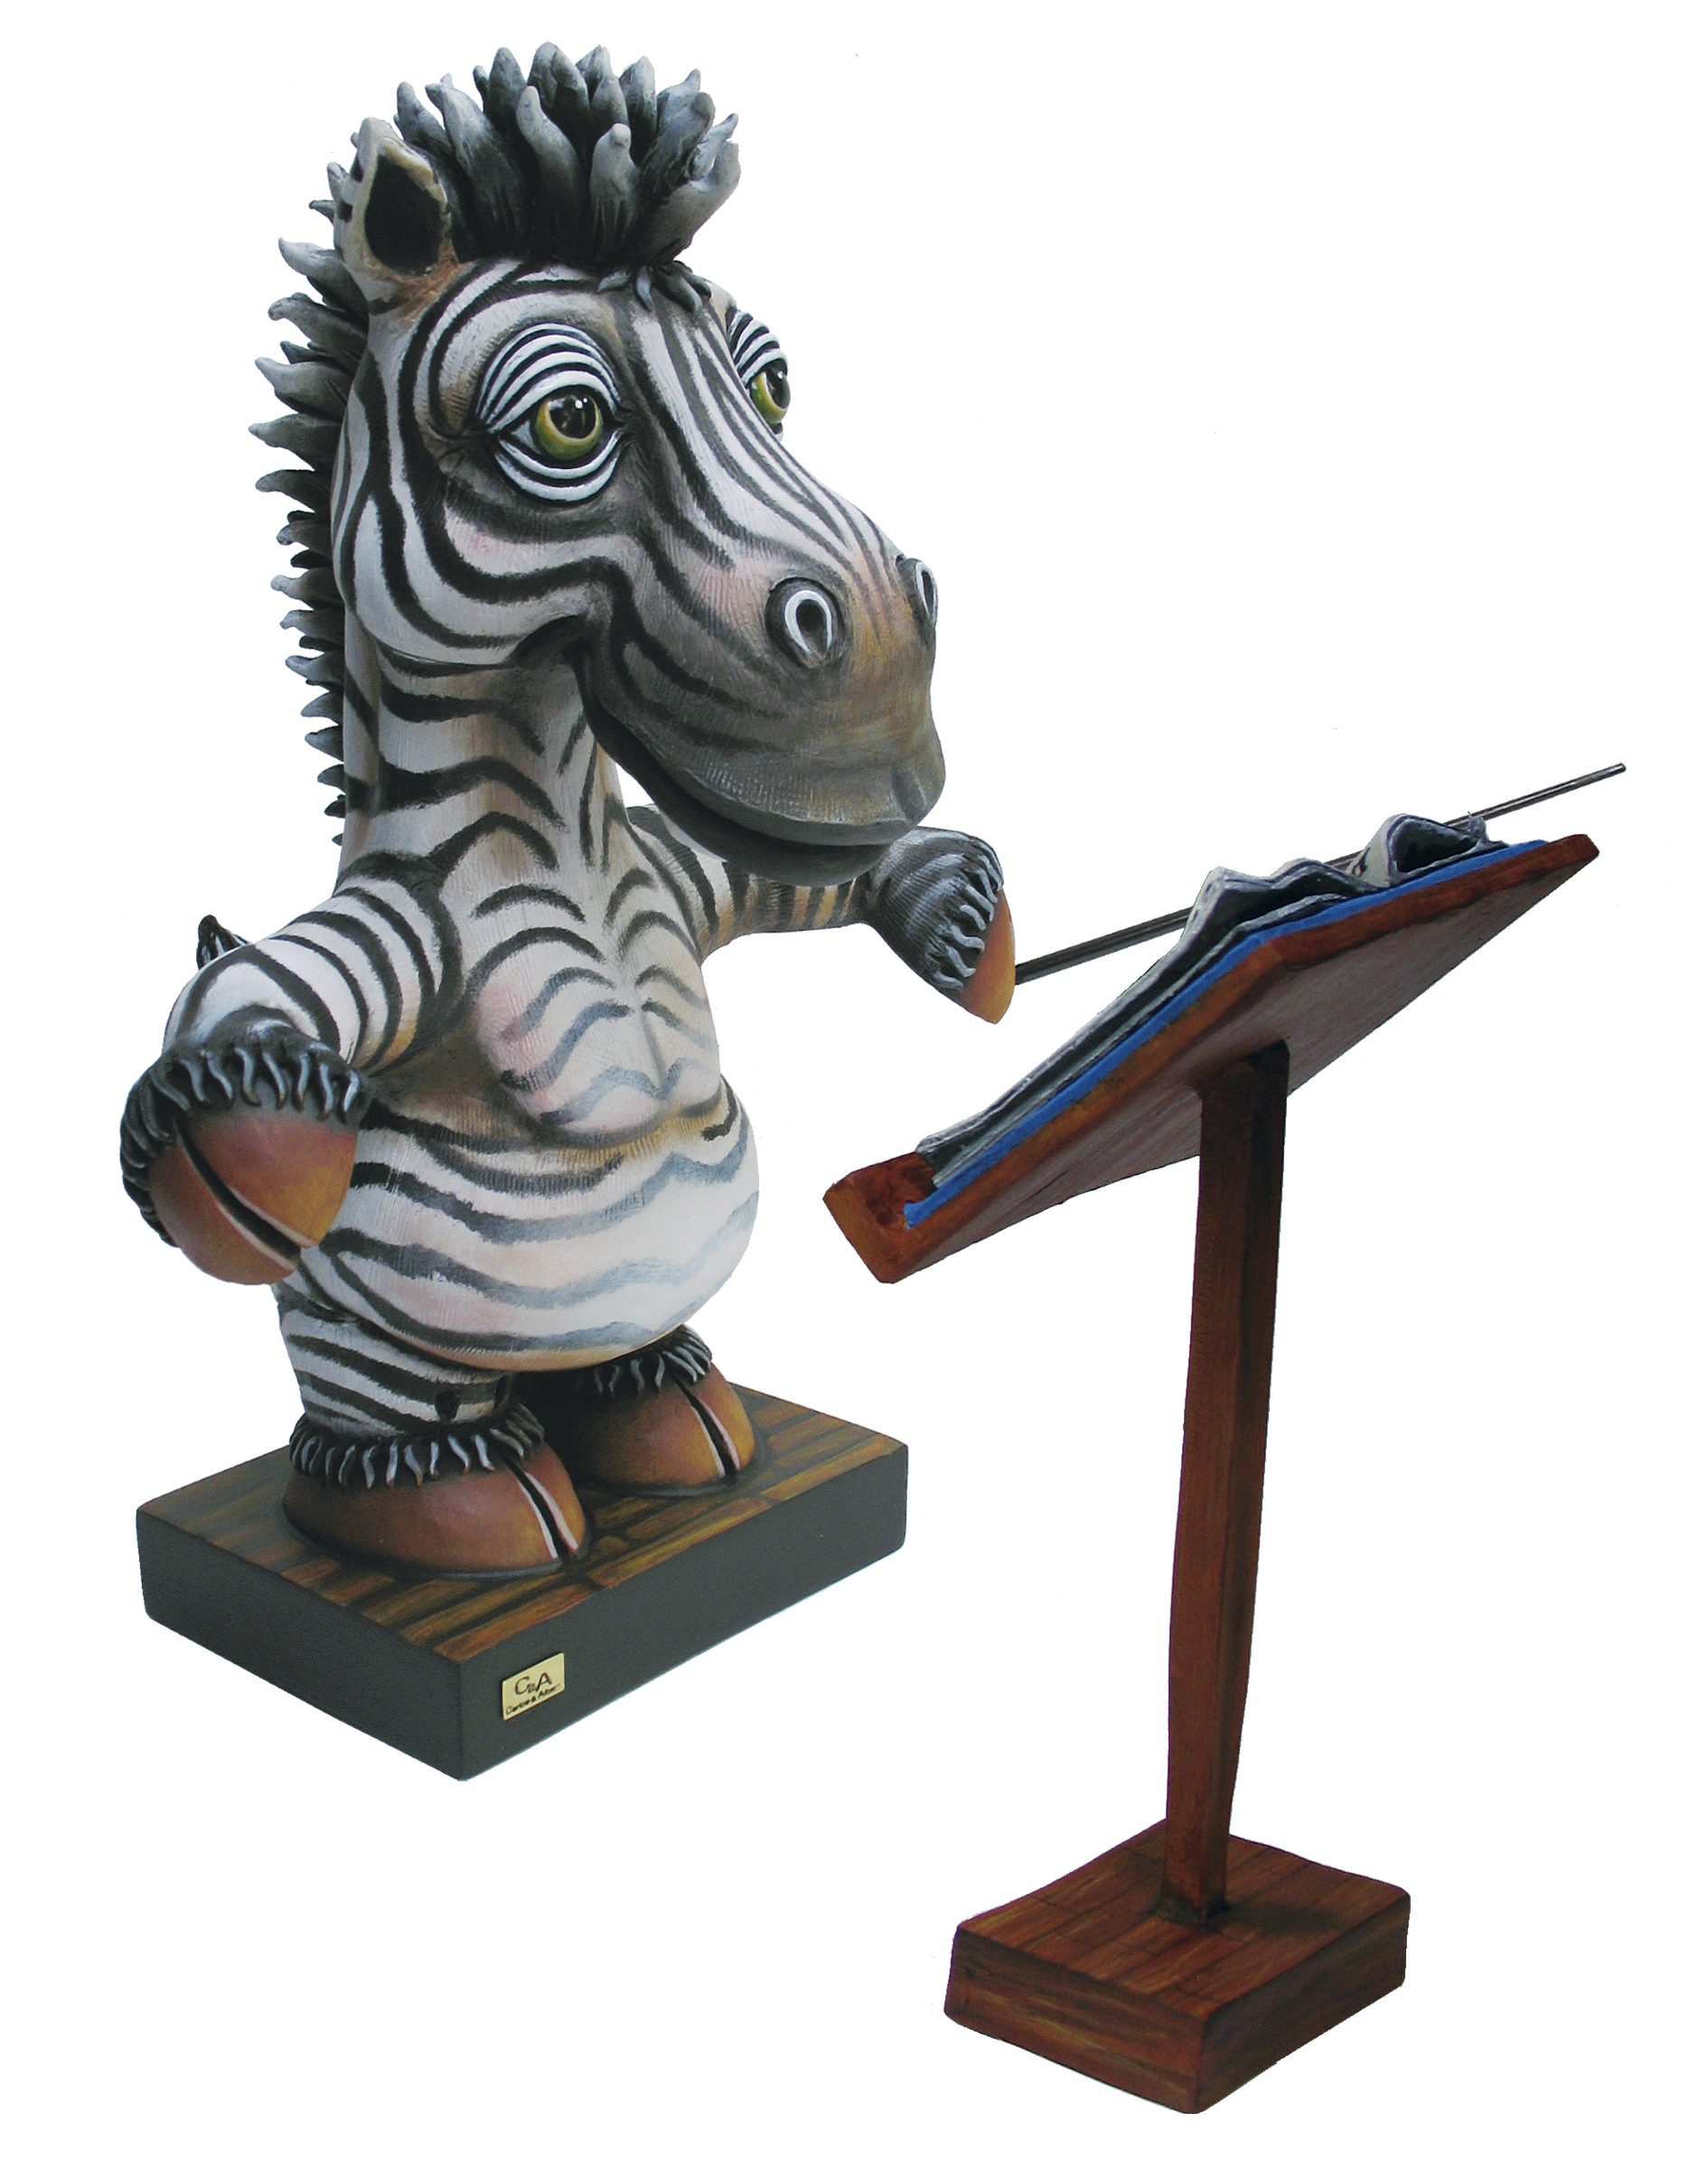 Signed, limited edition zebra sculpture